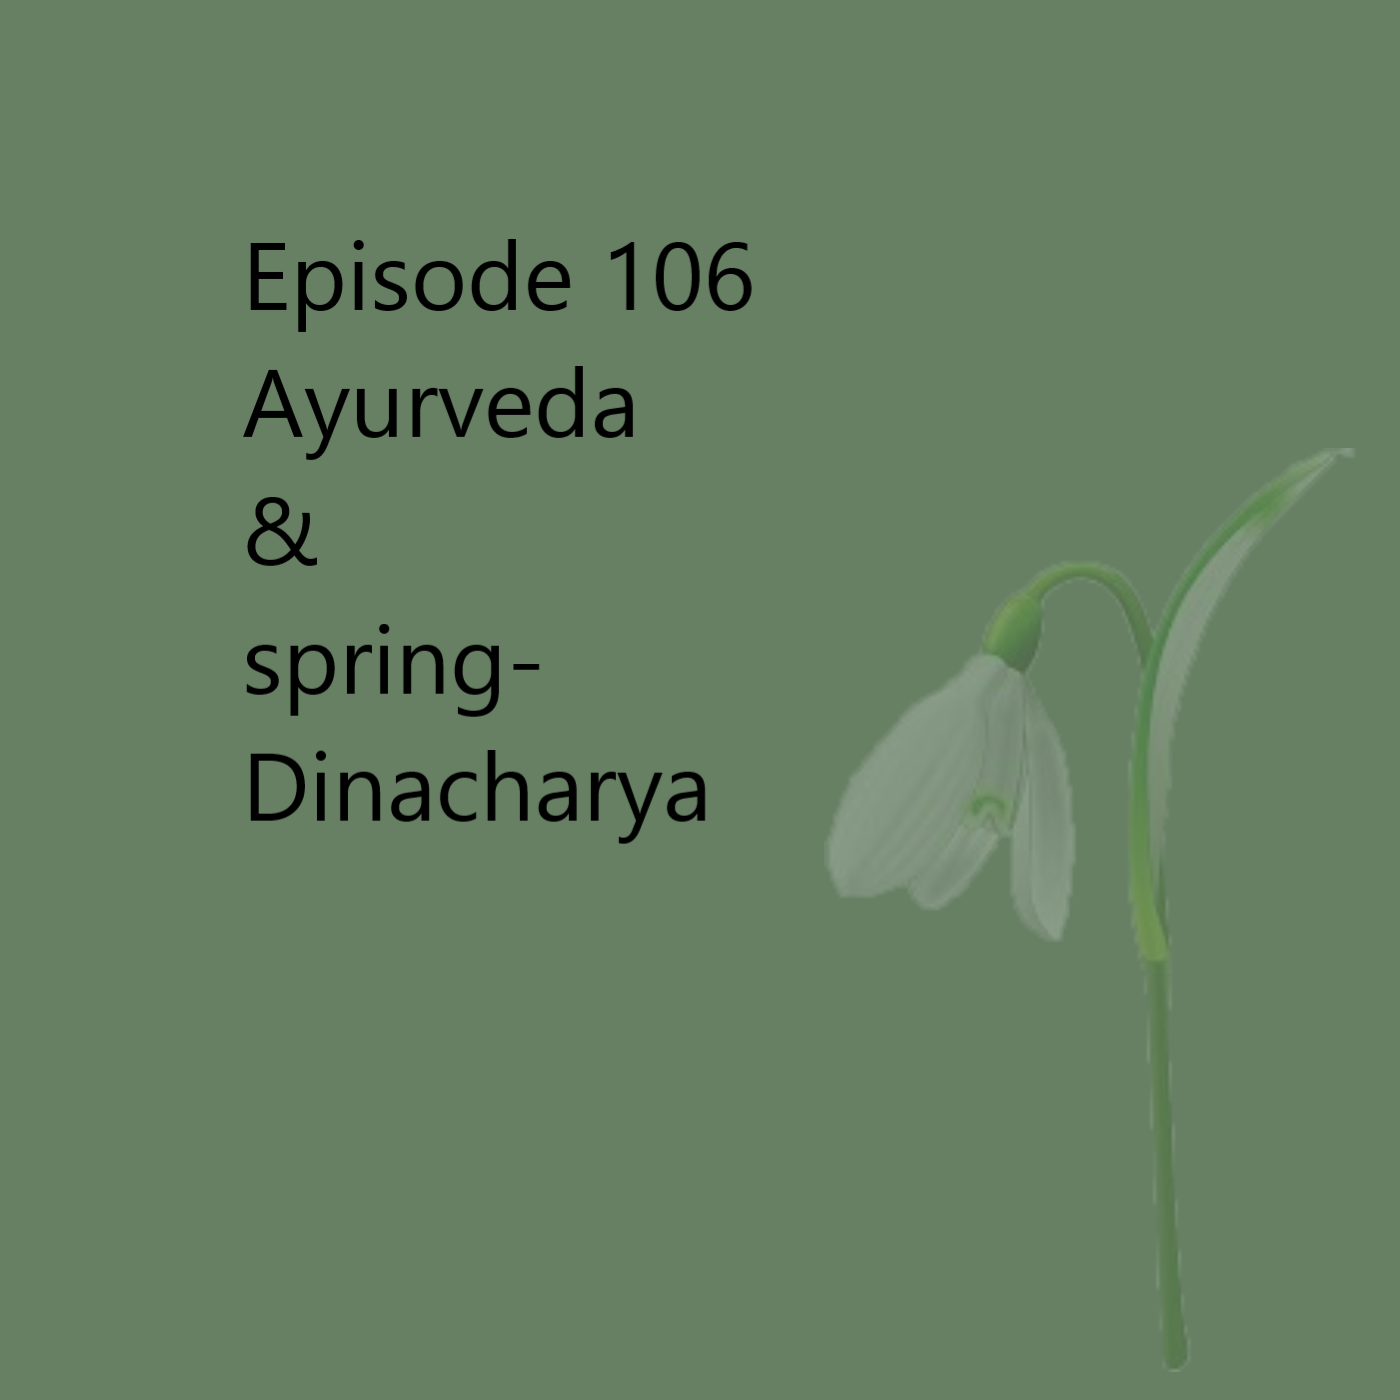 Episode 106 Ayurvedic Life - From Winter to Spring #1